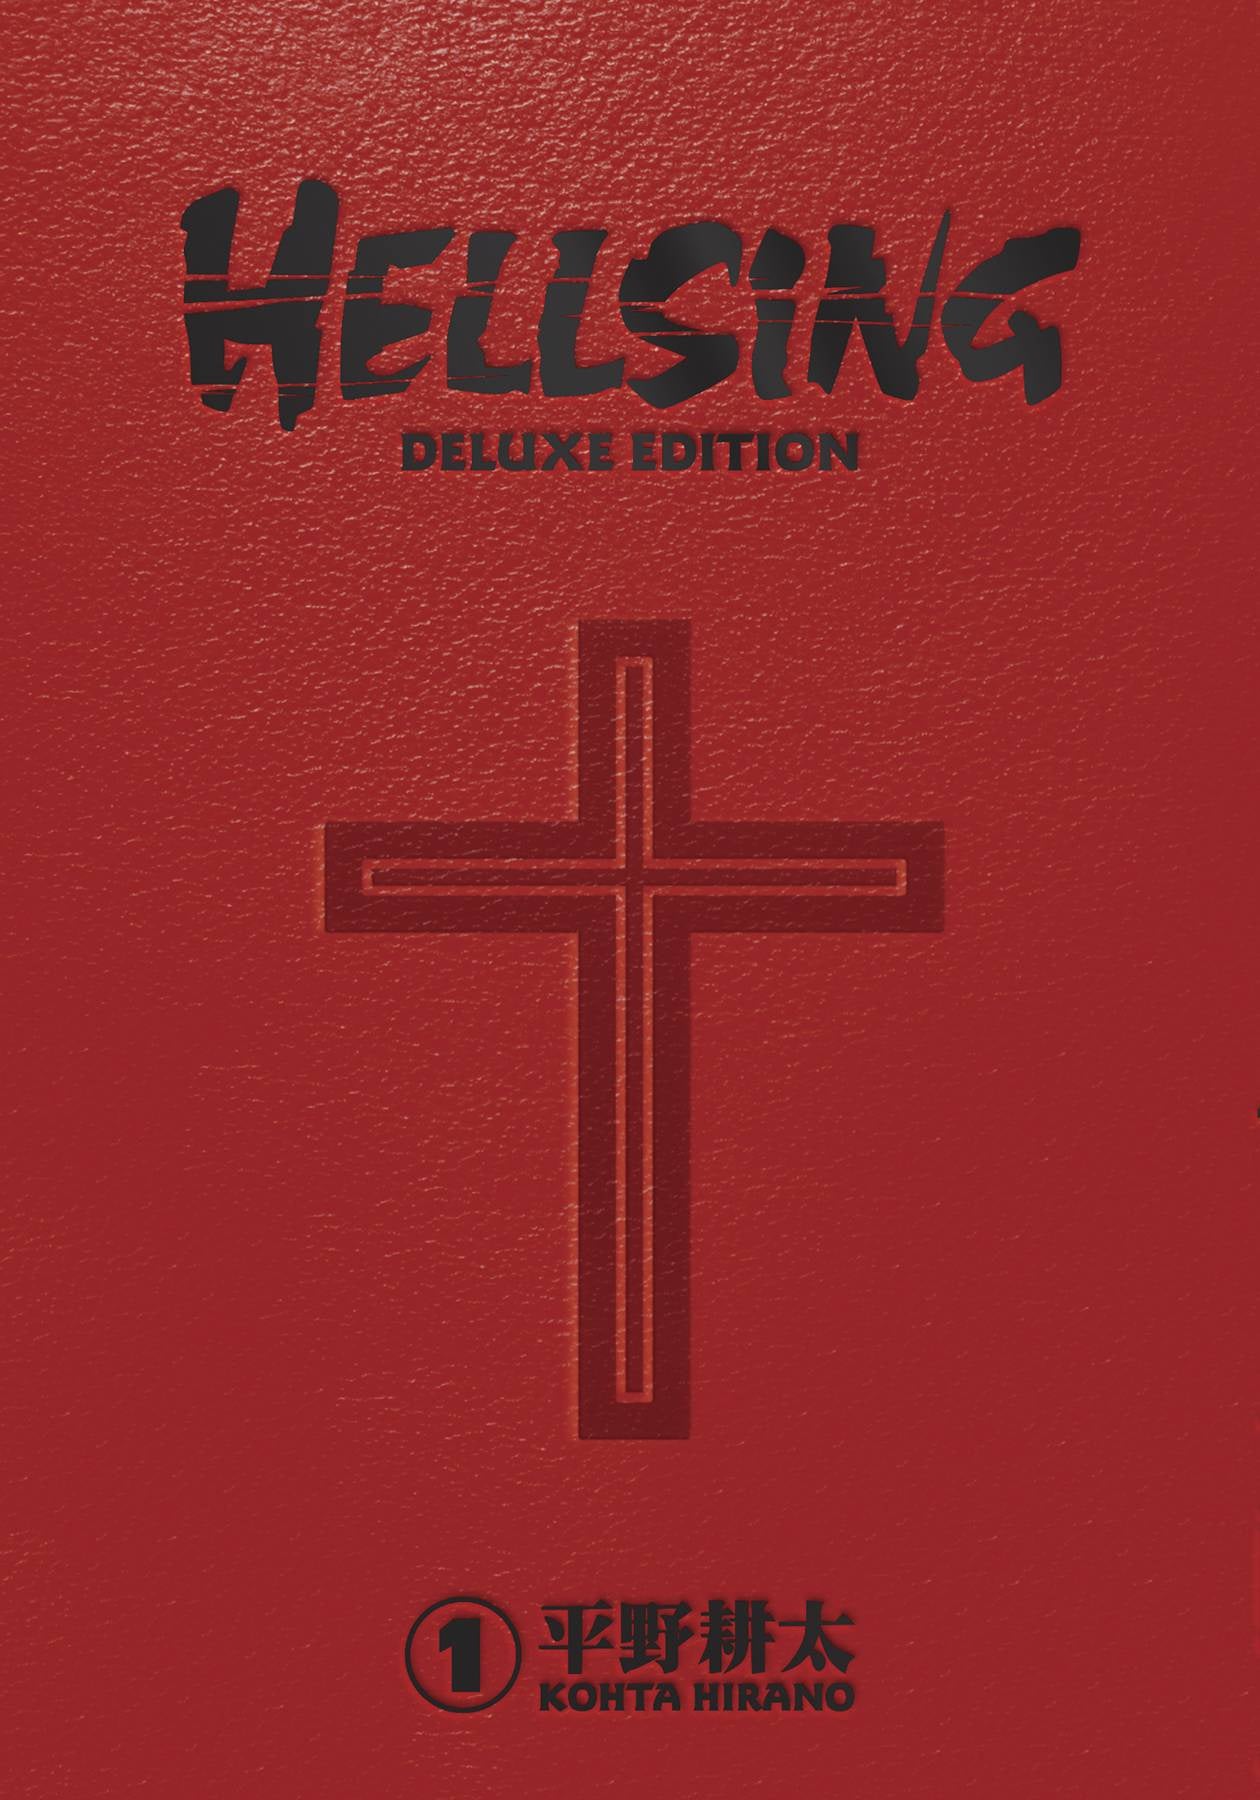 HELLSING DELUXE EDITION VOLUME 01 HC